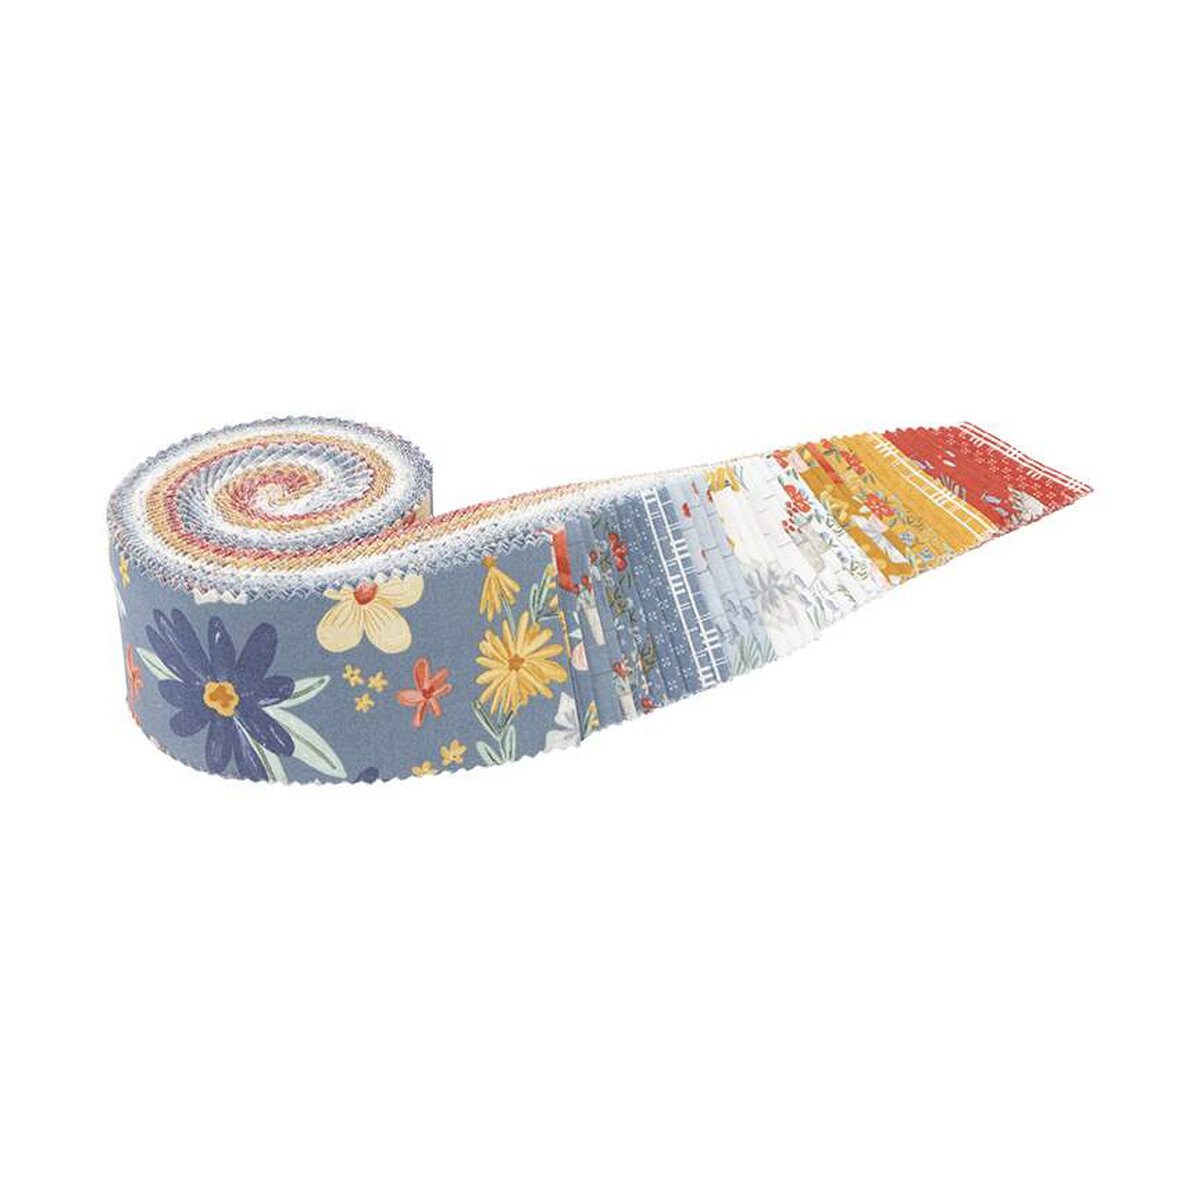 LKG: Farmhouse Sun Quilt Fabric - Jelly Roll - set of 40 2 1/2